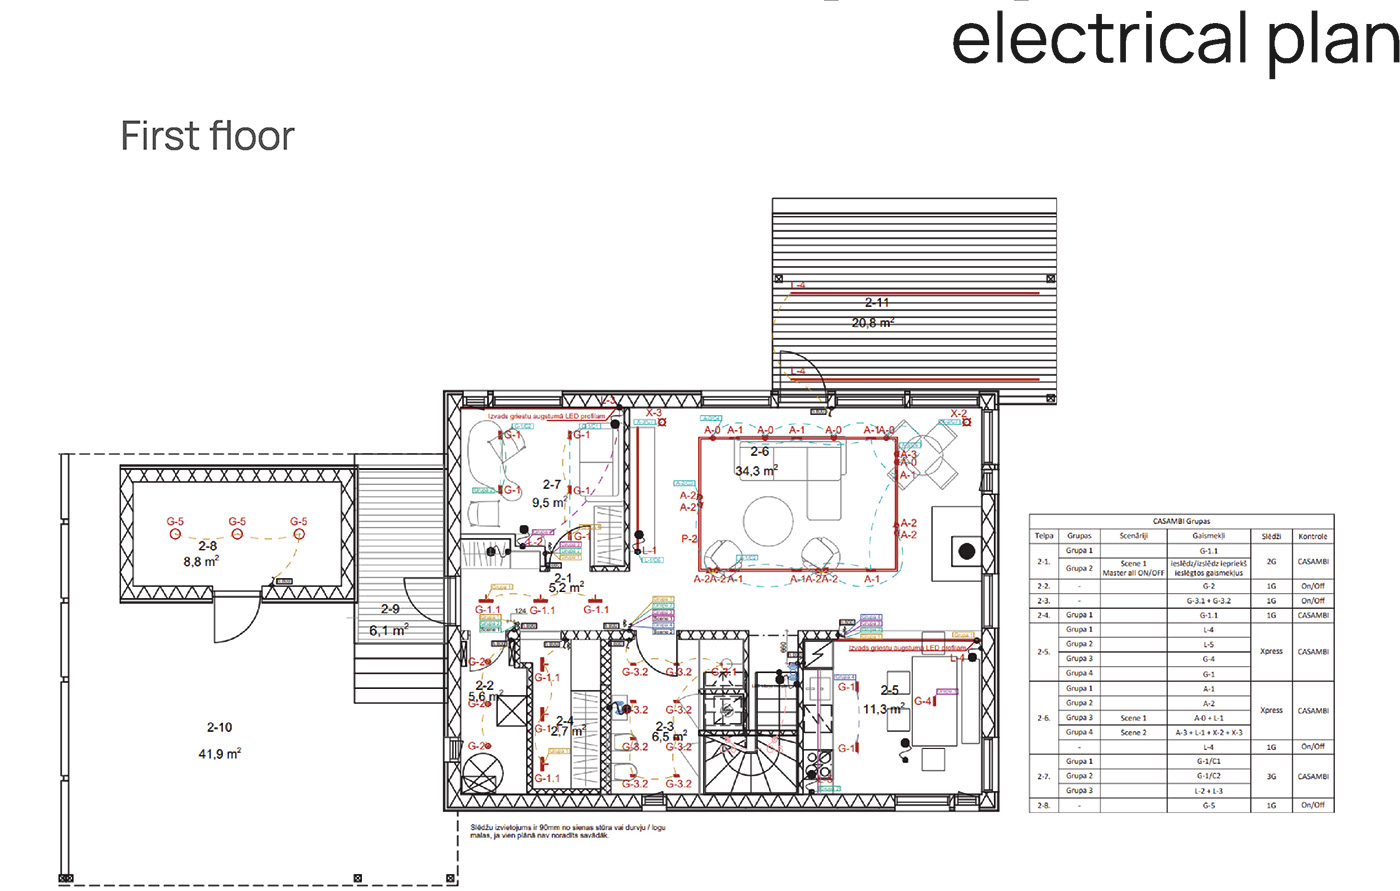 Lighting Design  lighting control system DIALux architecture interior design  electrical plan